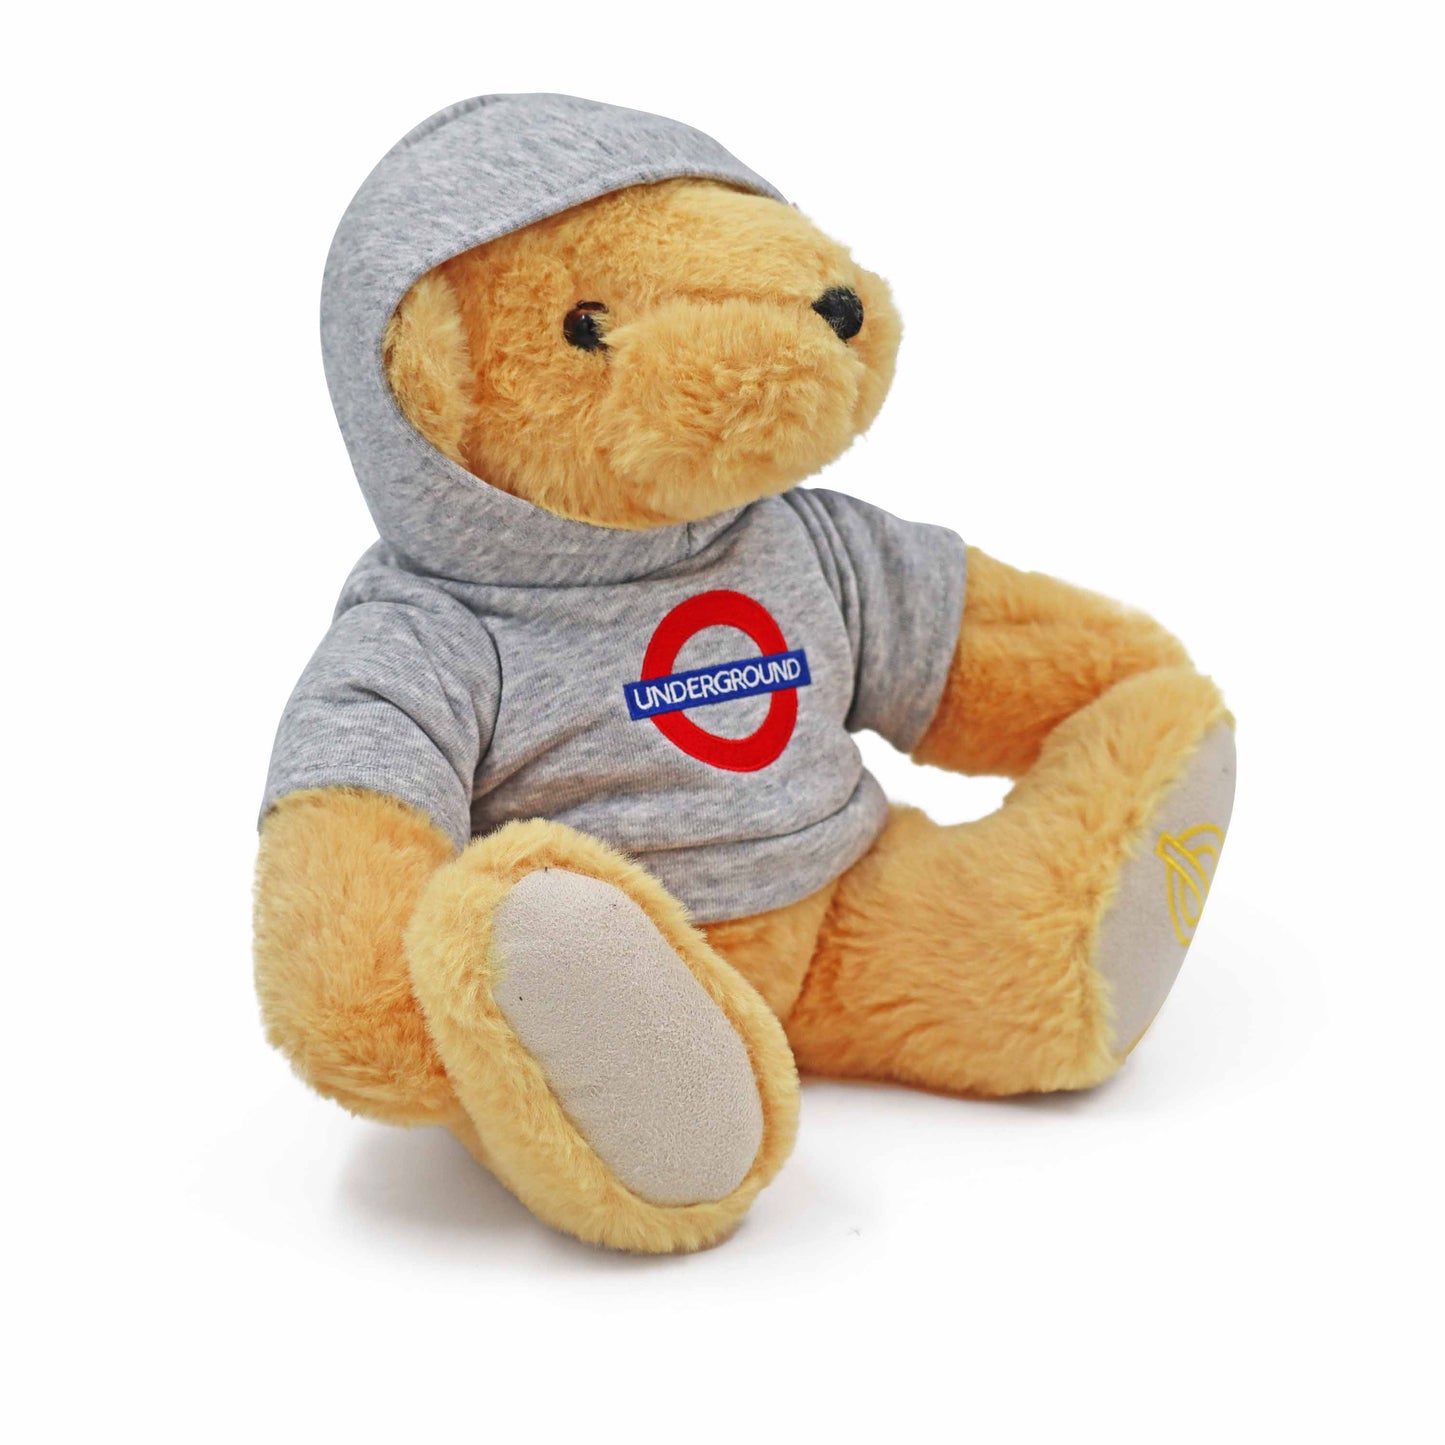 London Underground Teddy Bear - 'UNDERGROUND' Light Grey - 25cm - London Souvenirs Gifts